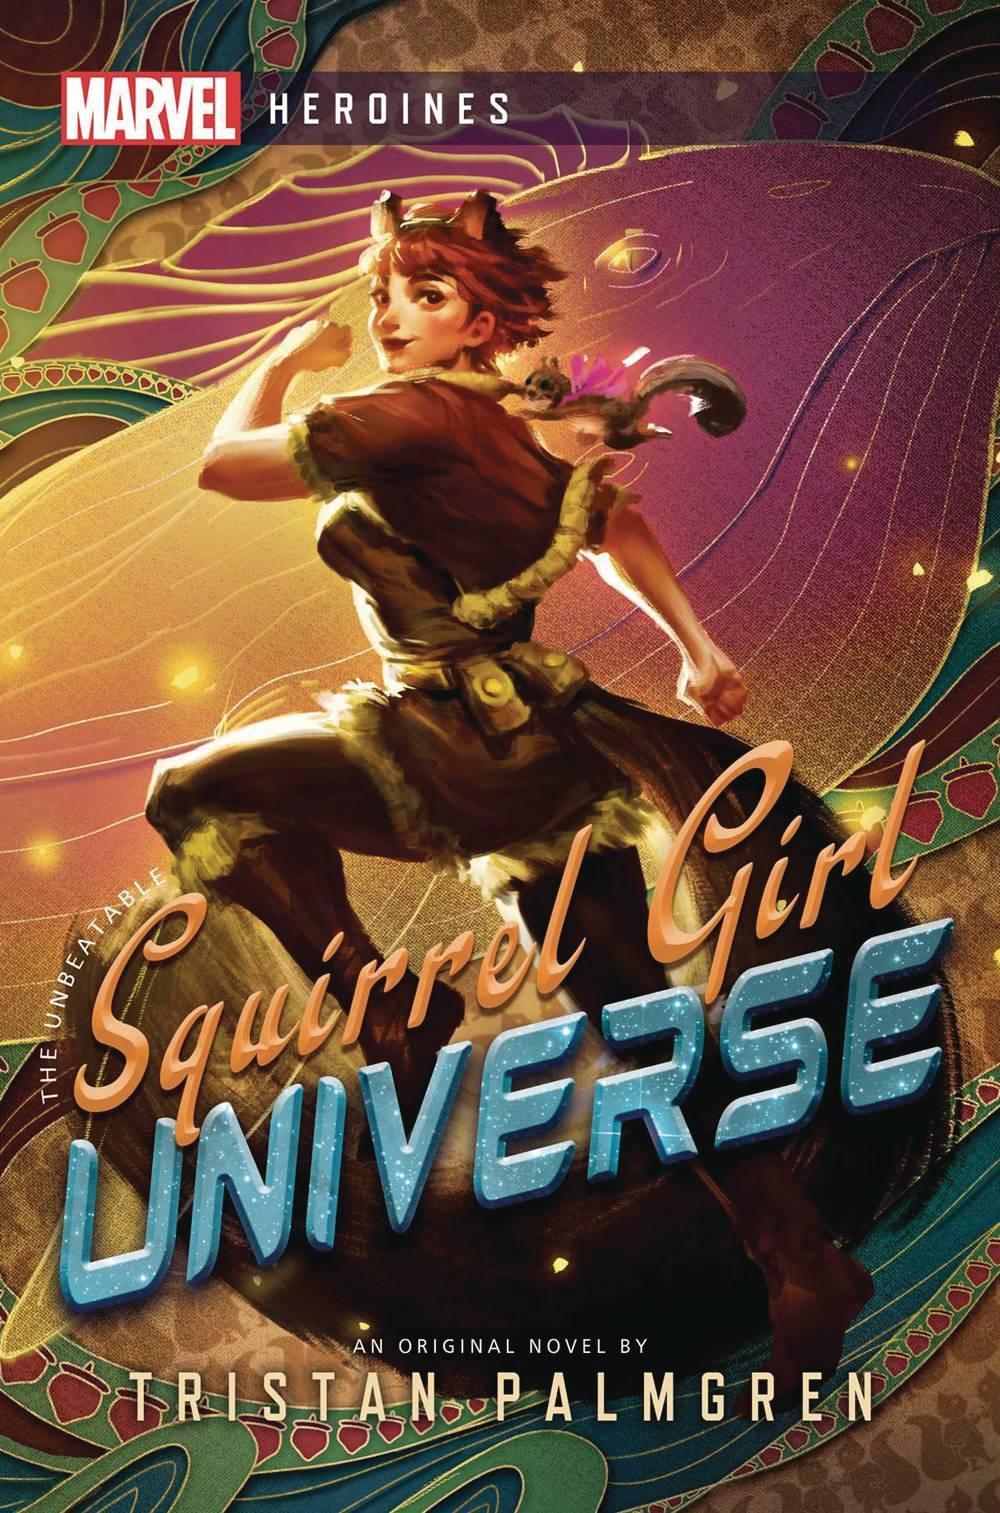 MARVEL HEROINES NOVEL SC VOL 04 SQUIRREL GIRL UNIVERSE - Kings Comics